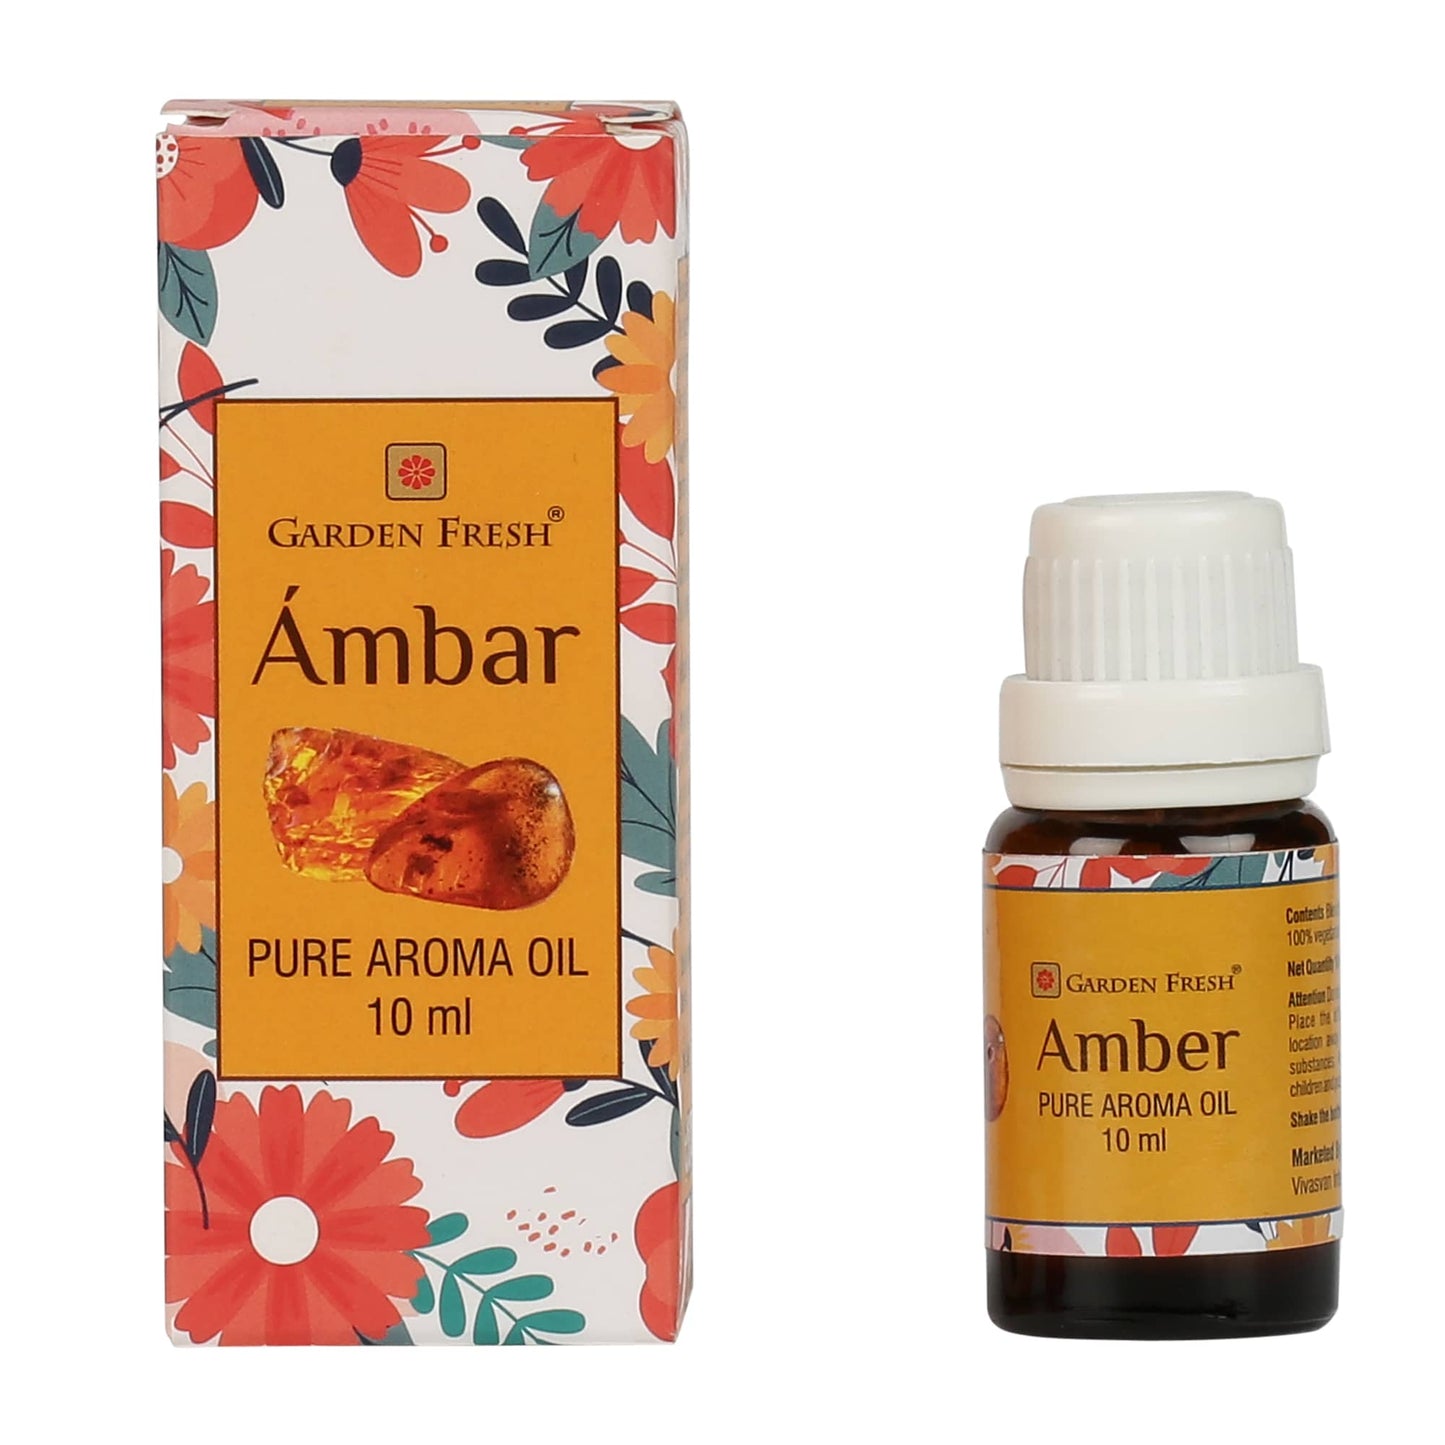 Amber aroma oil